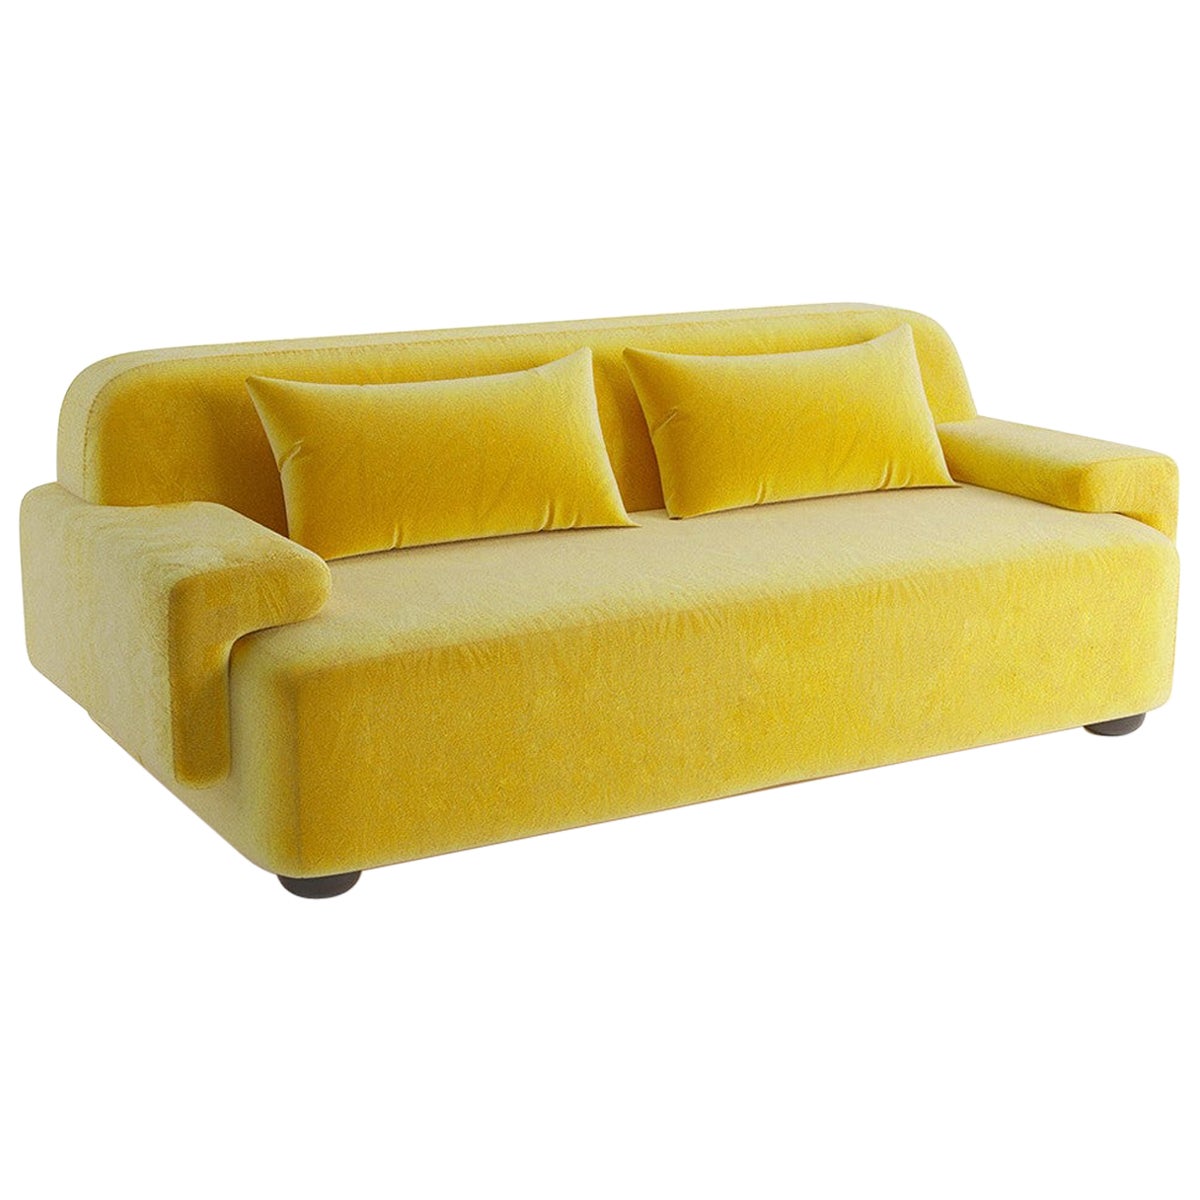 Popus Editions Lena 4 Seater Sofa in Yellow Verone Velvet Upholstery